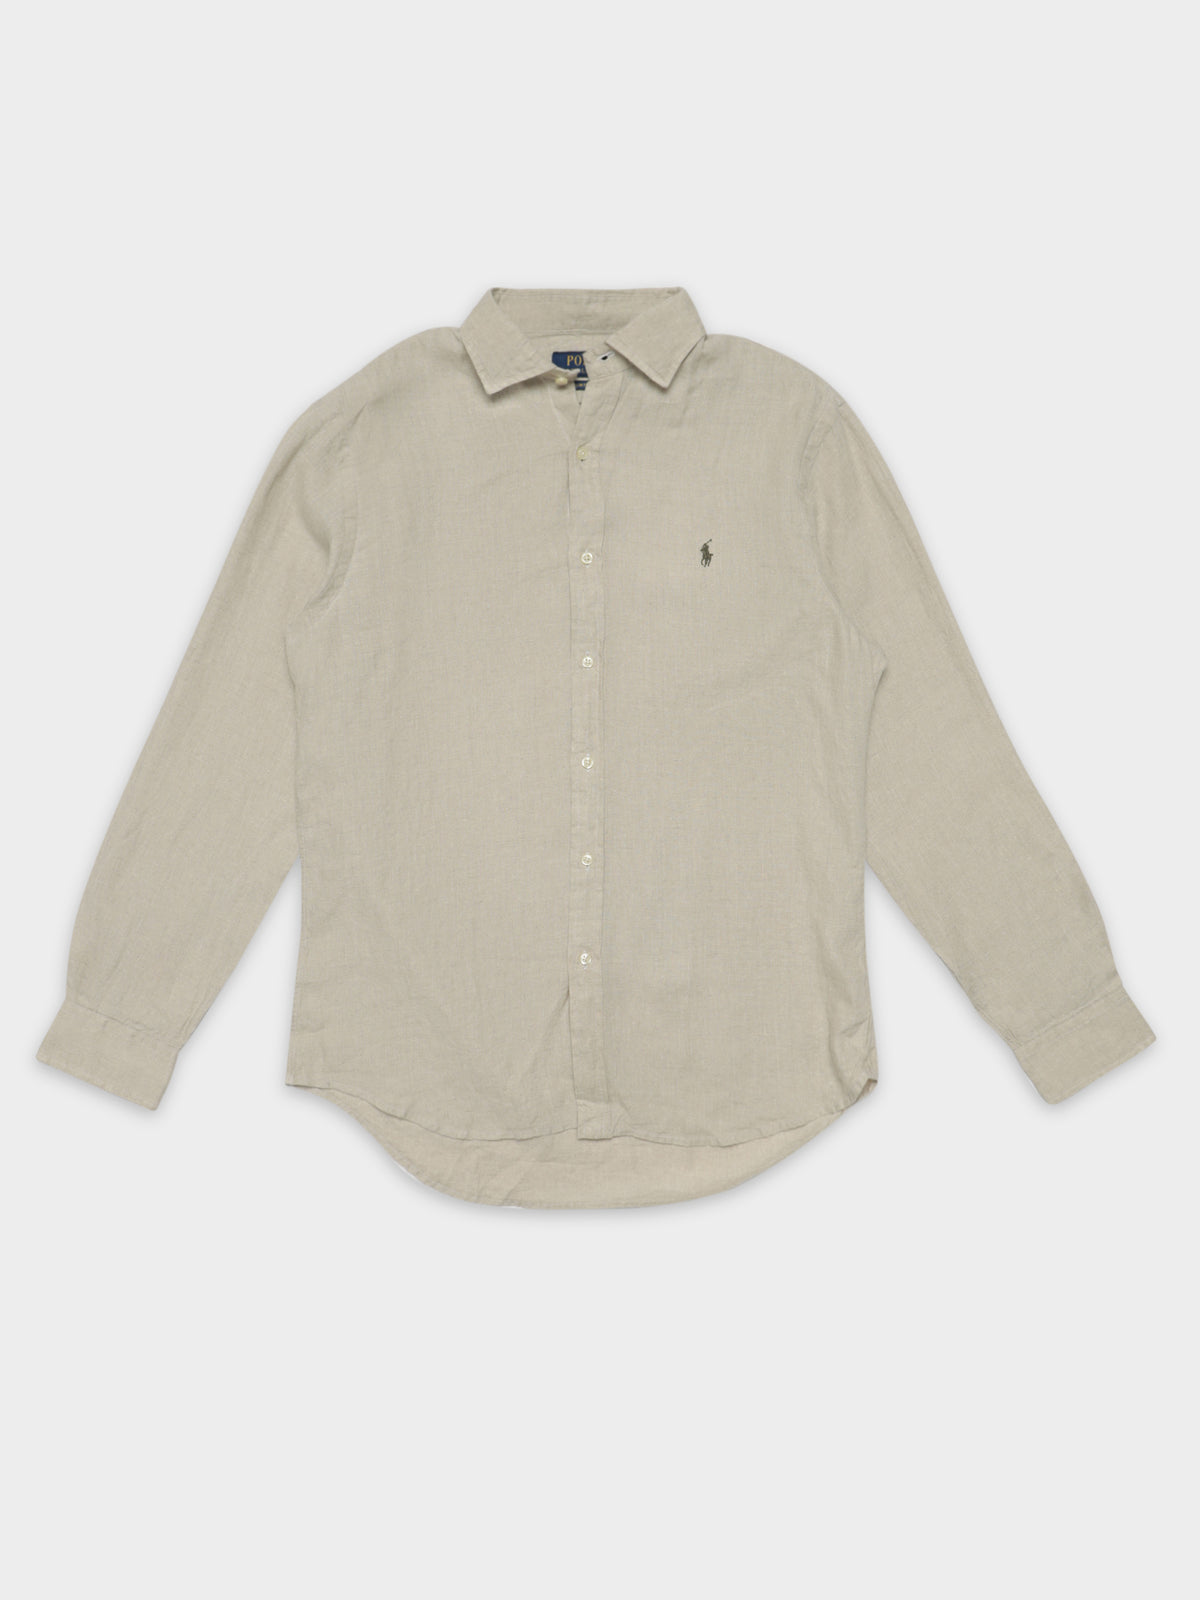 Long Sleeve Linen Shirt in Beige